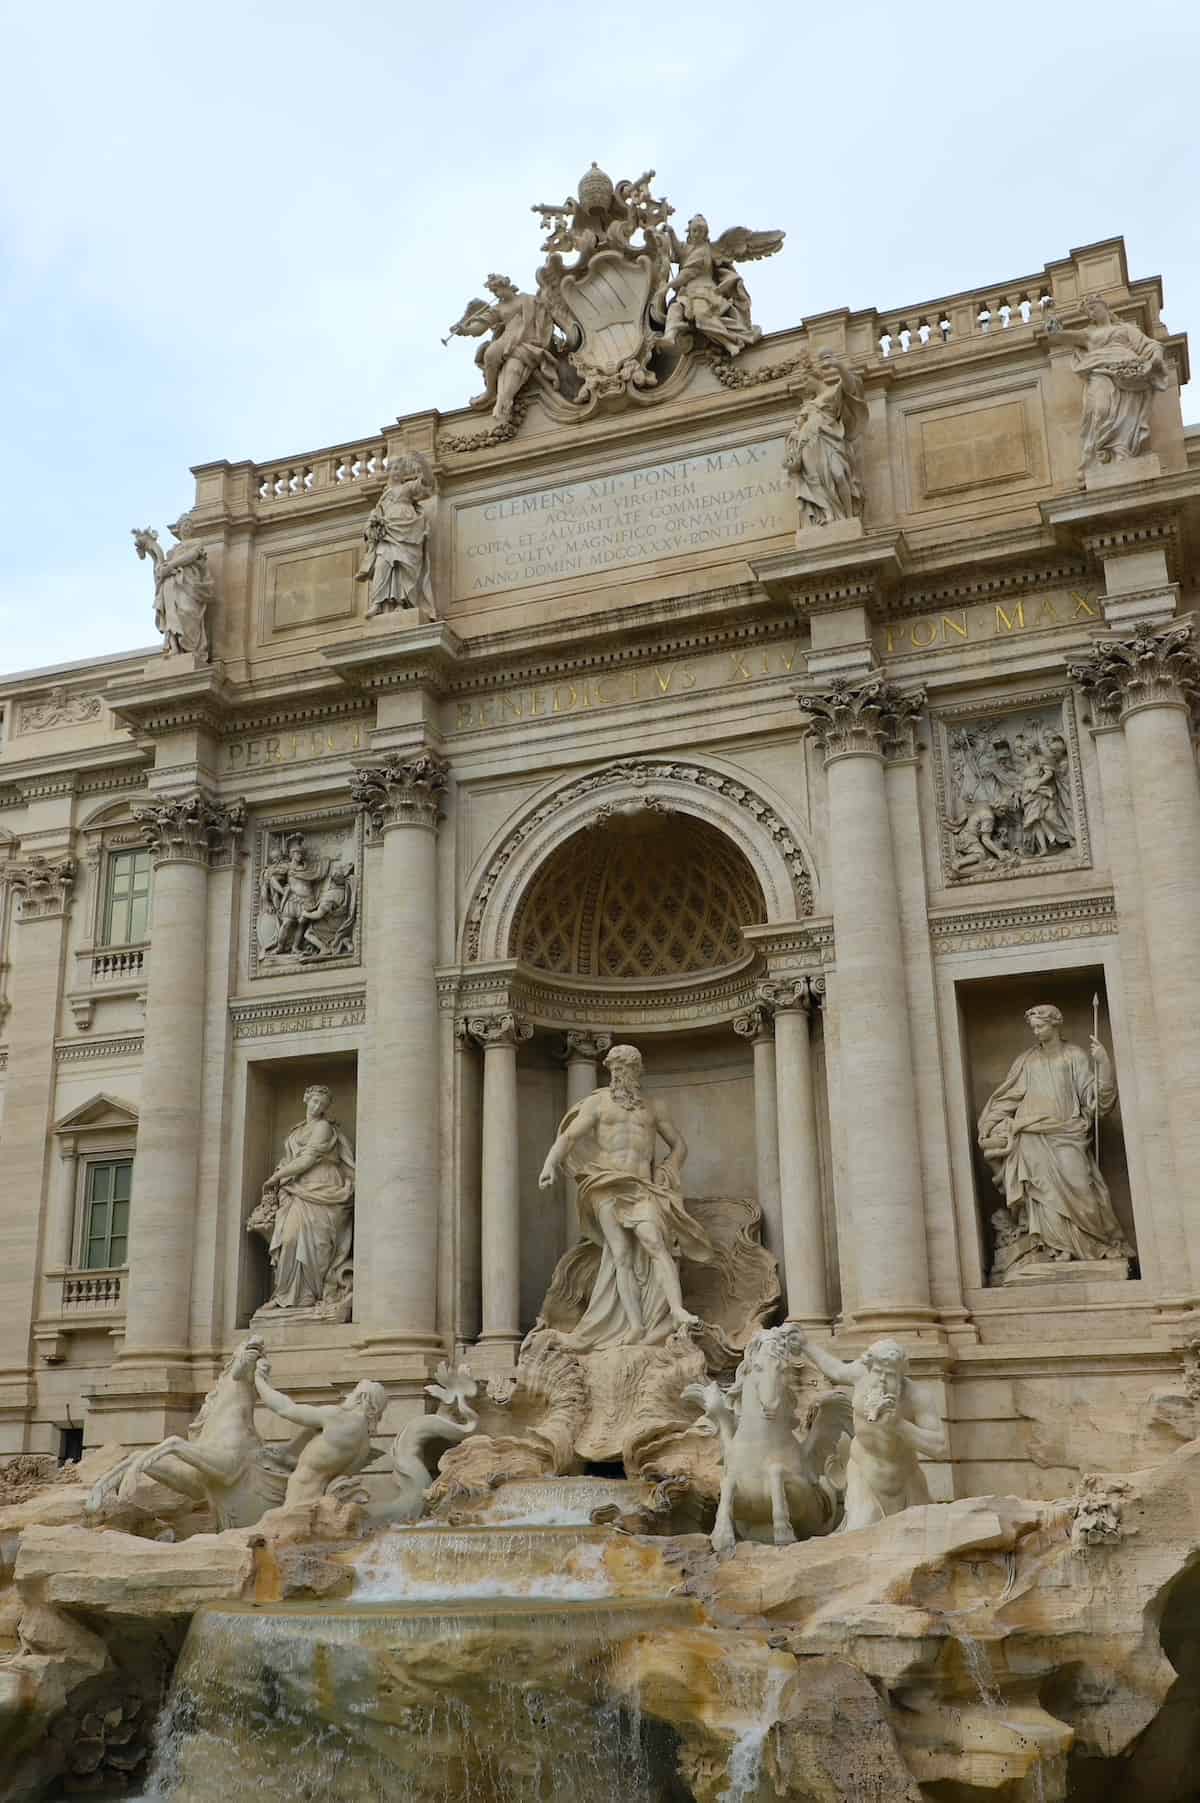 Trevi Fountain in Rome Italy.